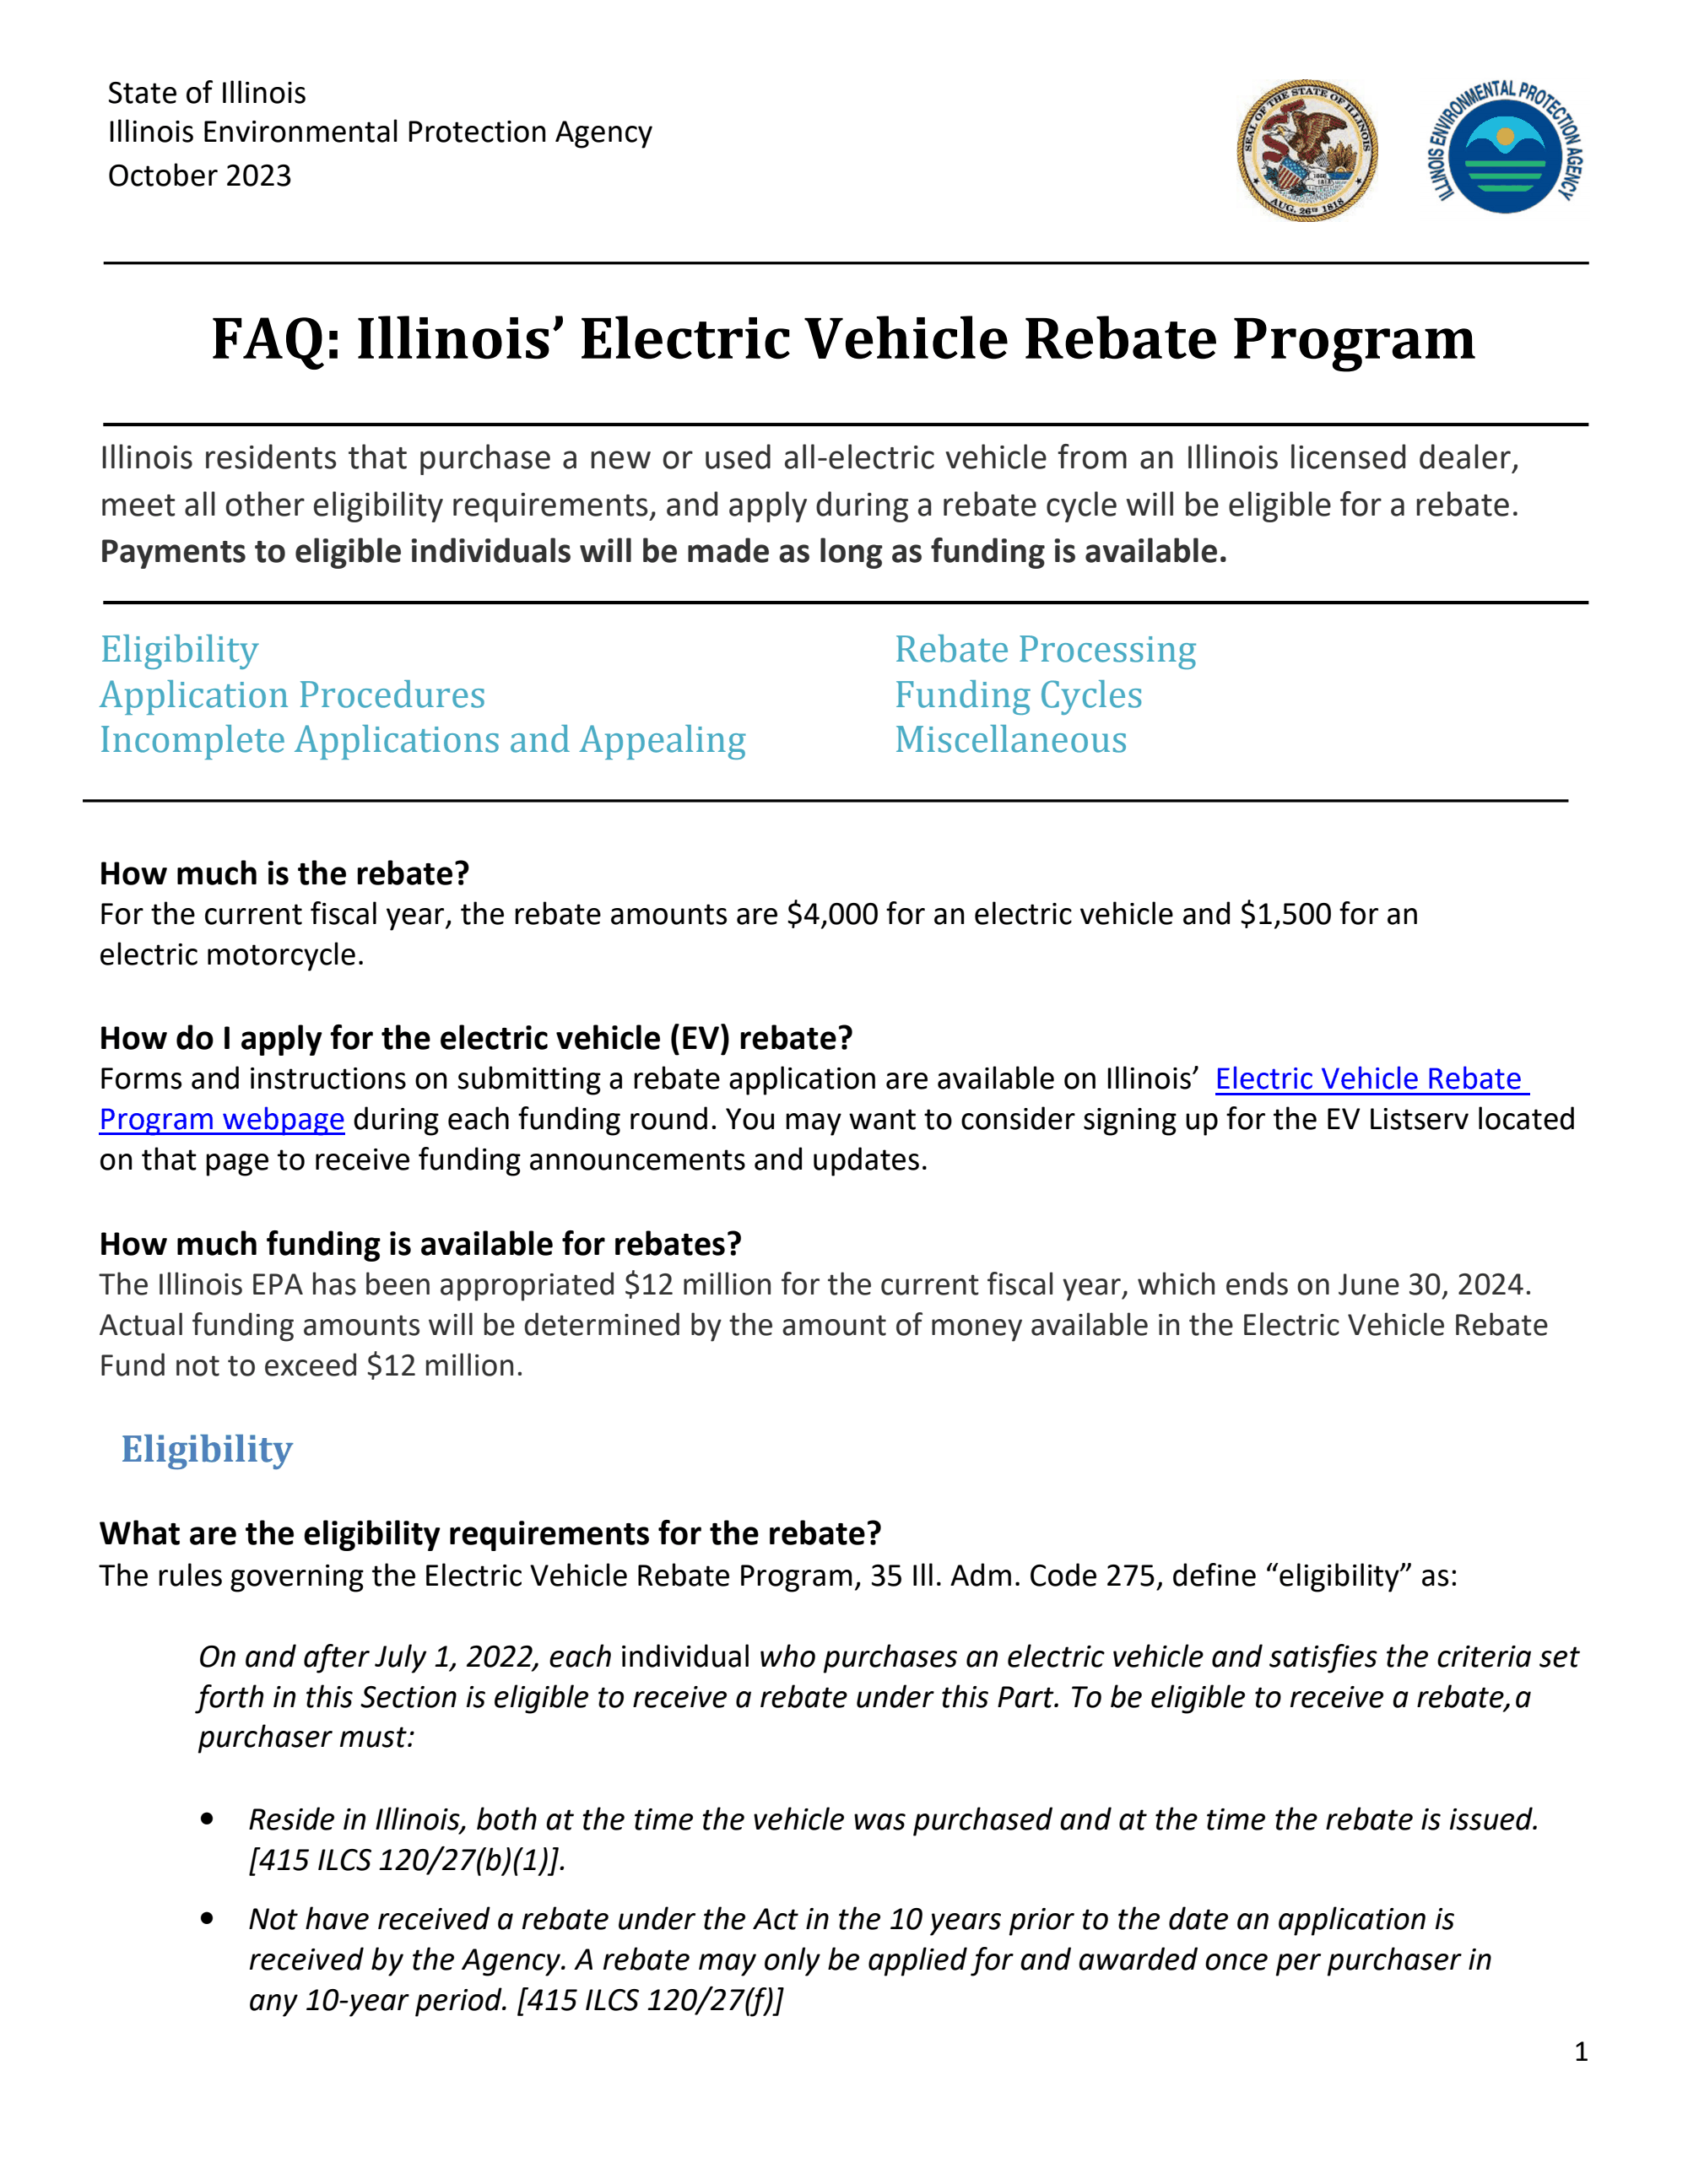 FAQ Illinois’ Electric Vehicle Rebate Program DocumentCloud